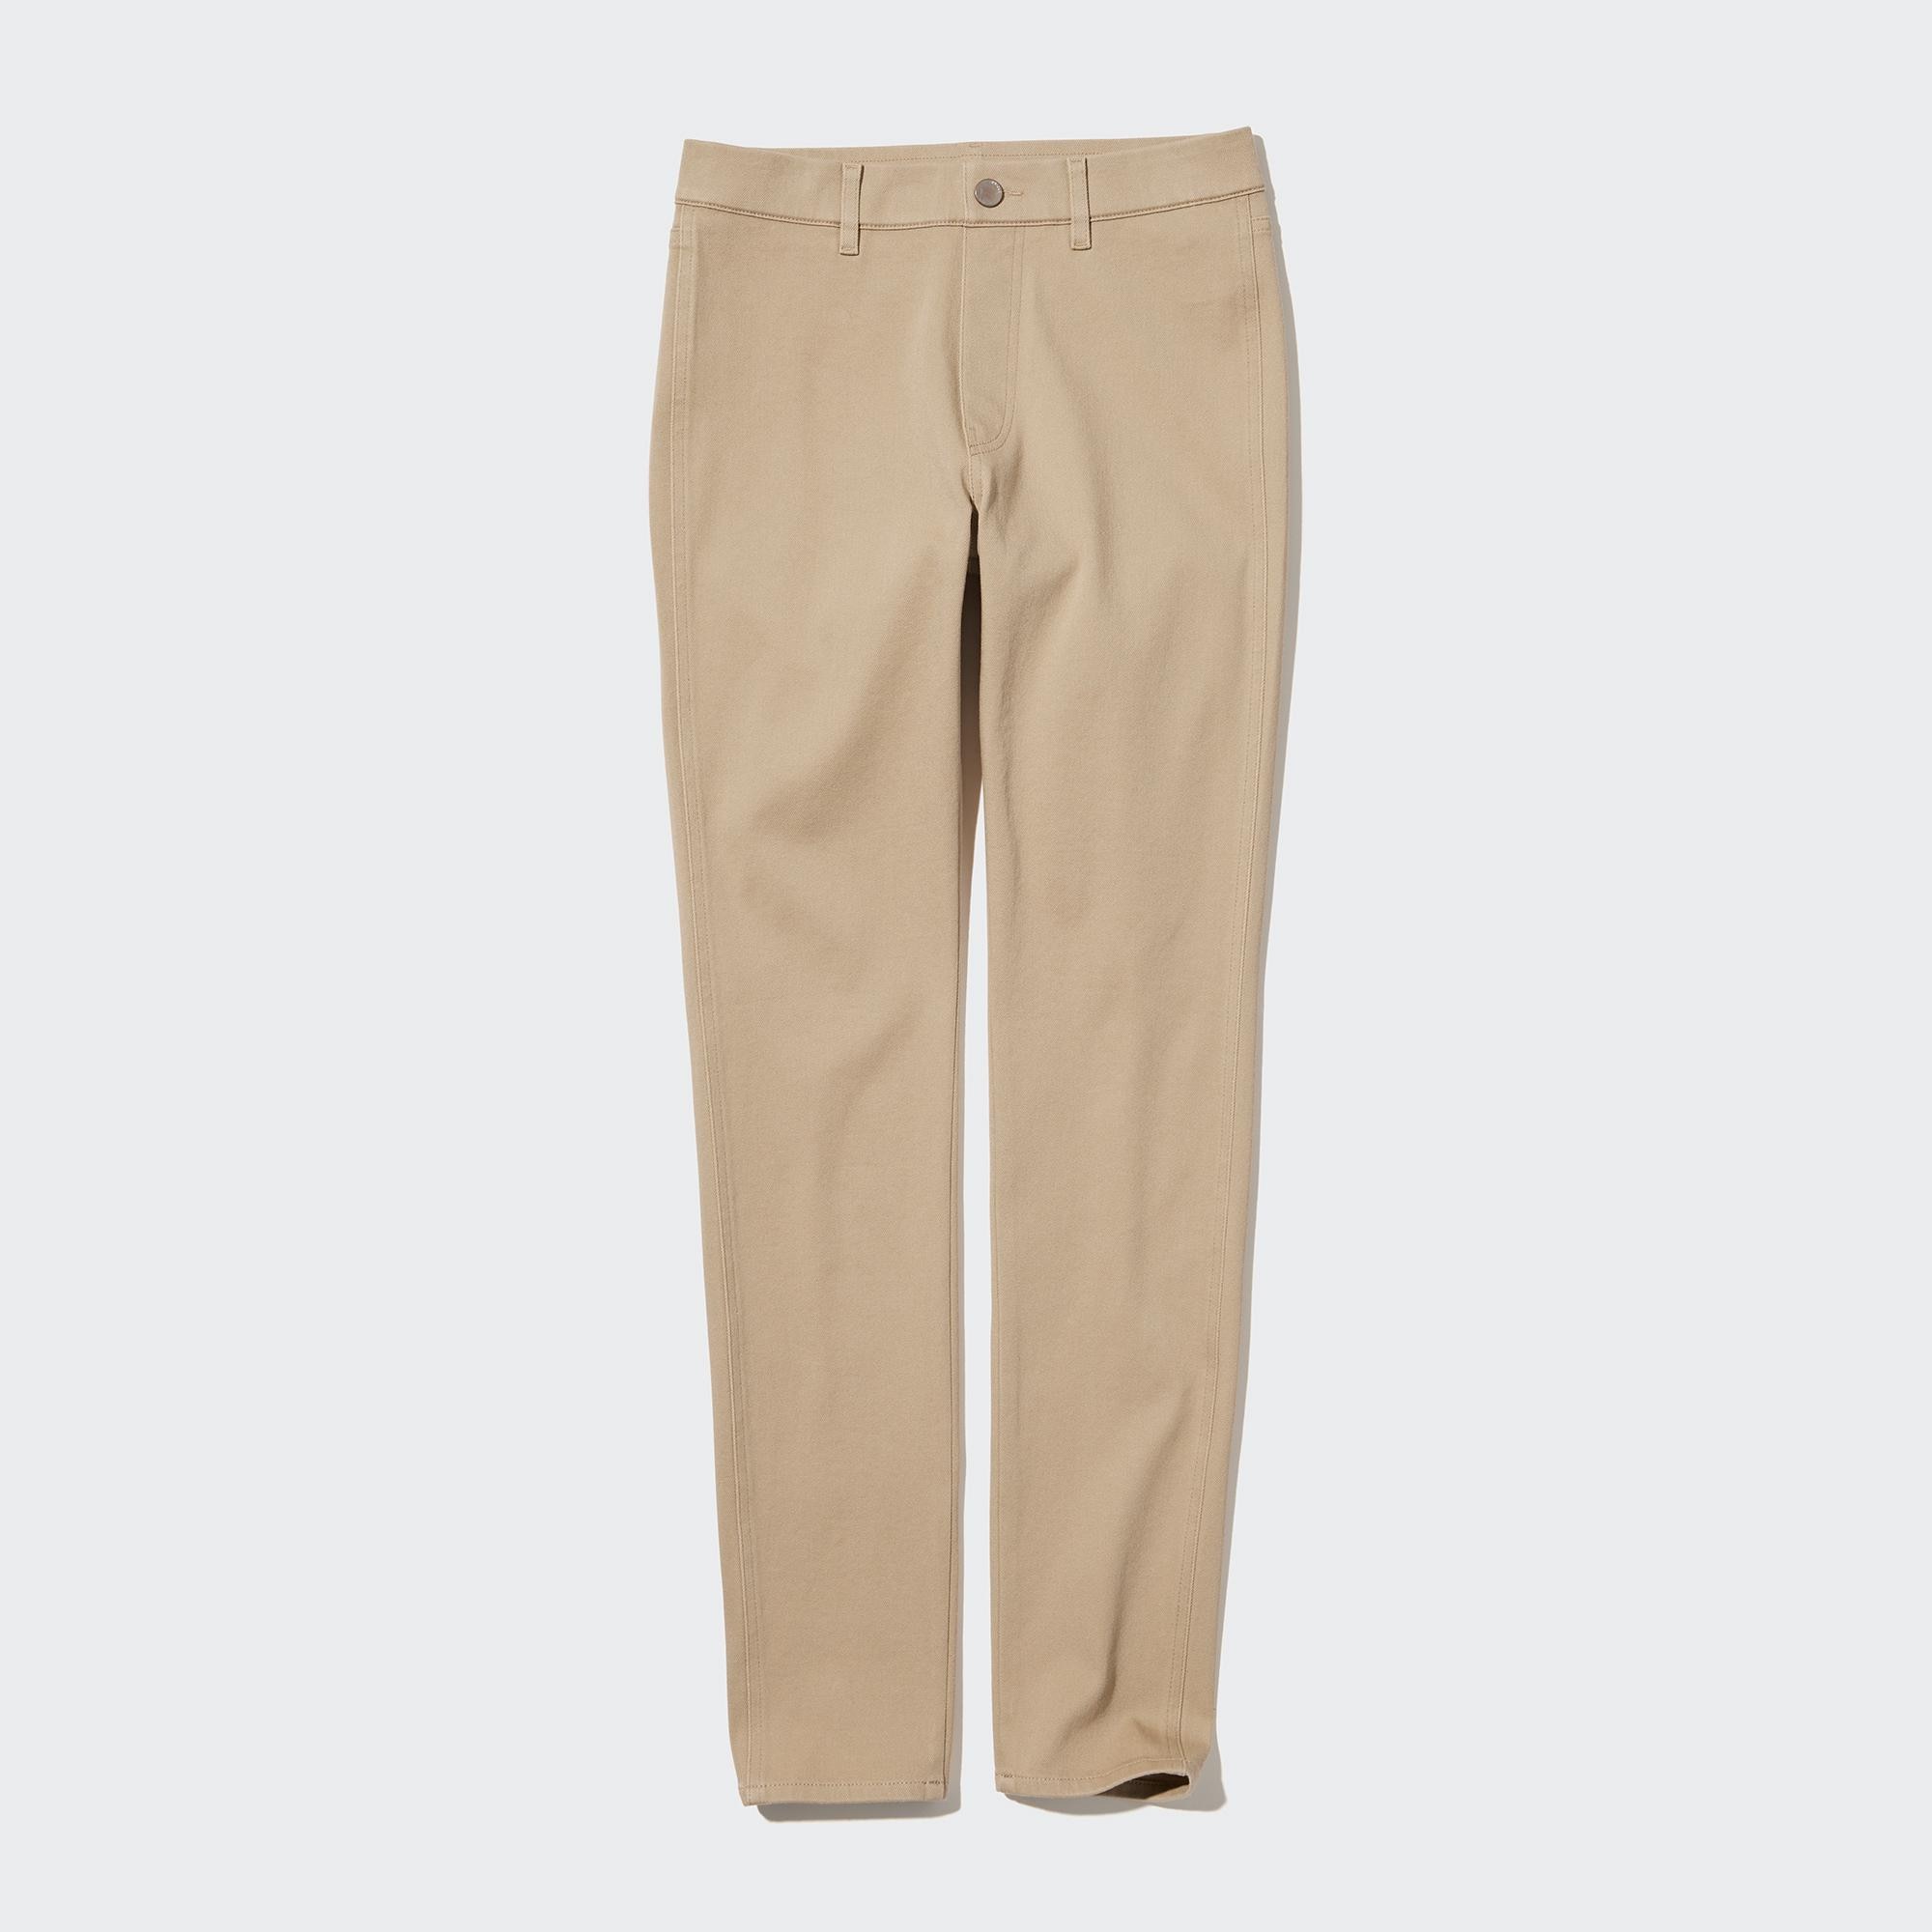 BN👖UNIQLO ultra stretch legging pants (beige)